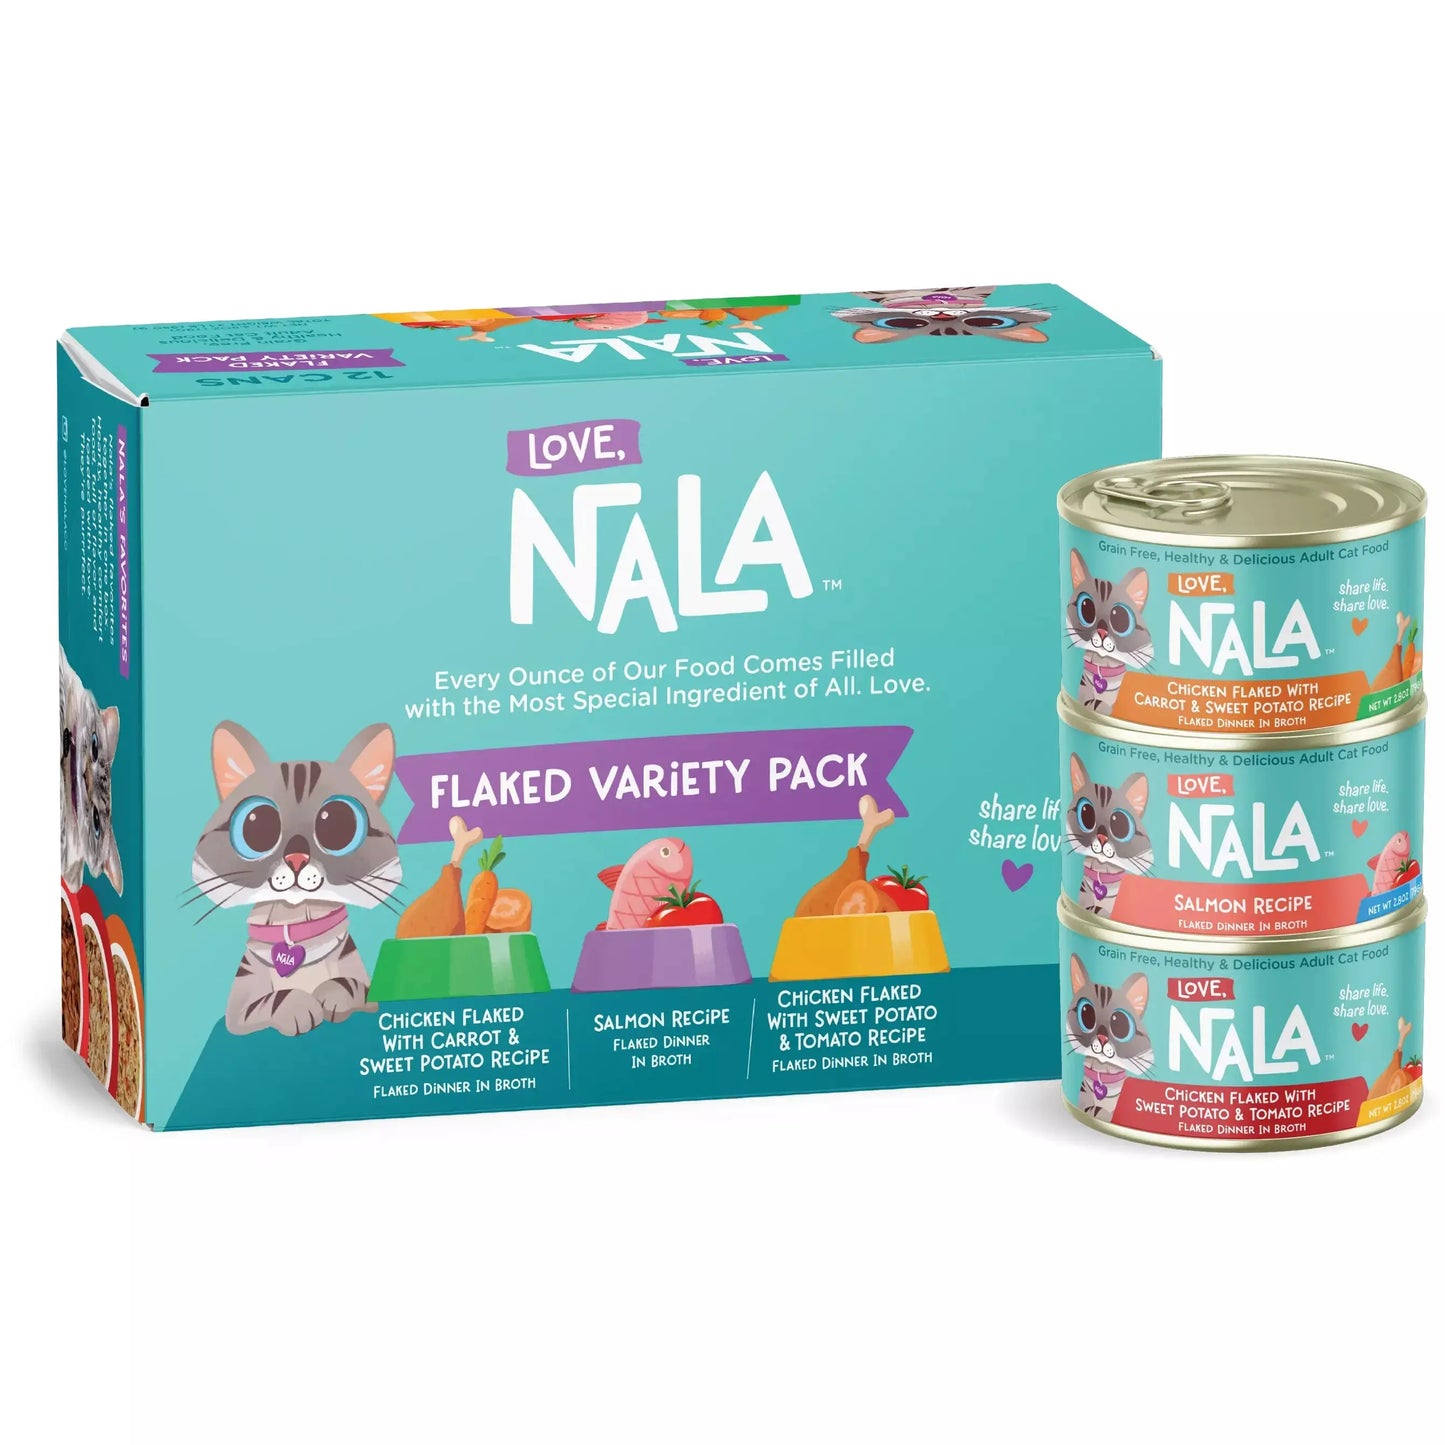 Love, Nala Flaked Variety Pack 2.8oz - 12 per Case Love Nala